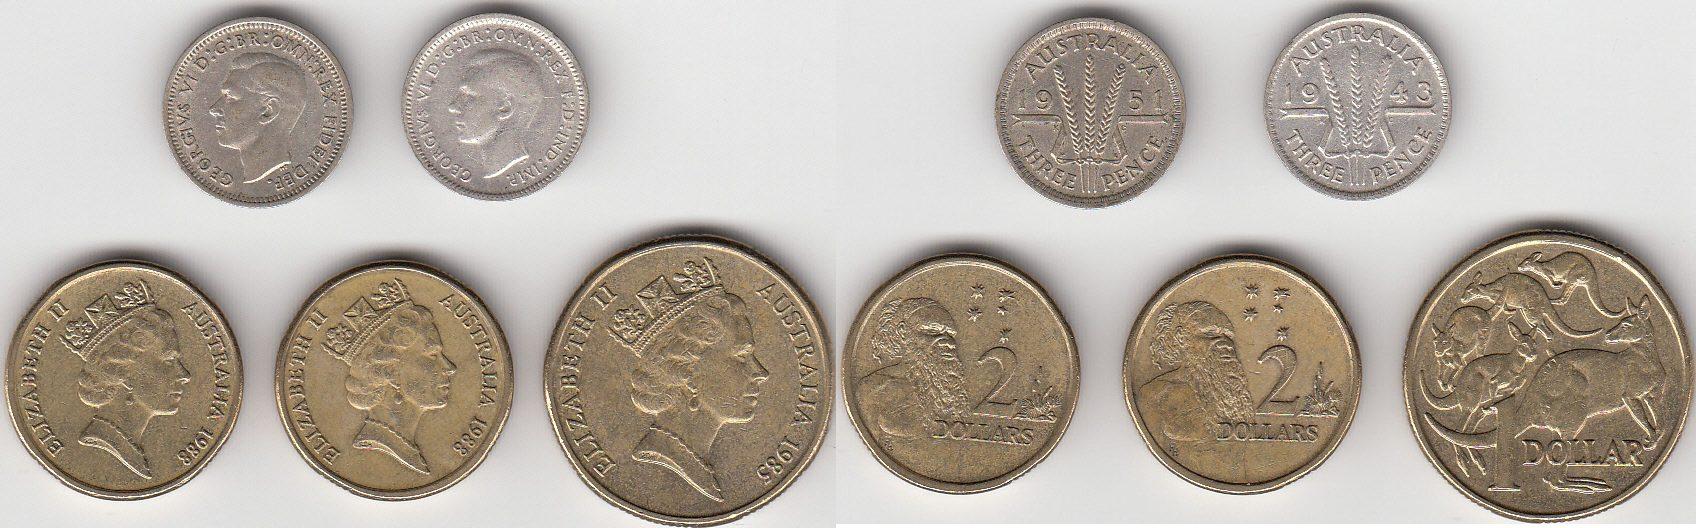 Foto Australien Lot aus 5 modernen Münzen 1943-1988